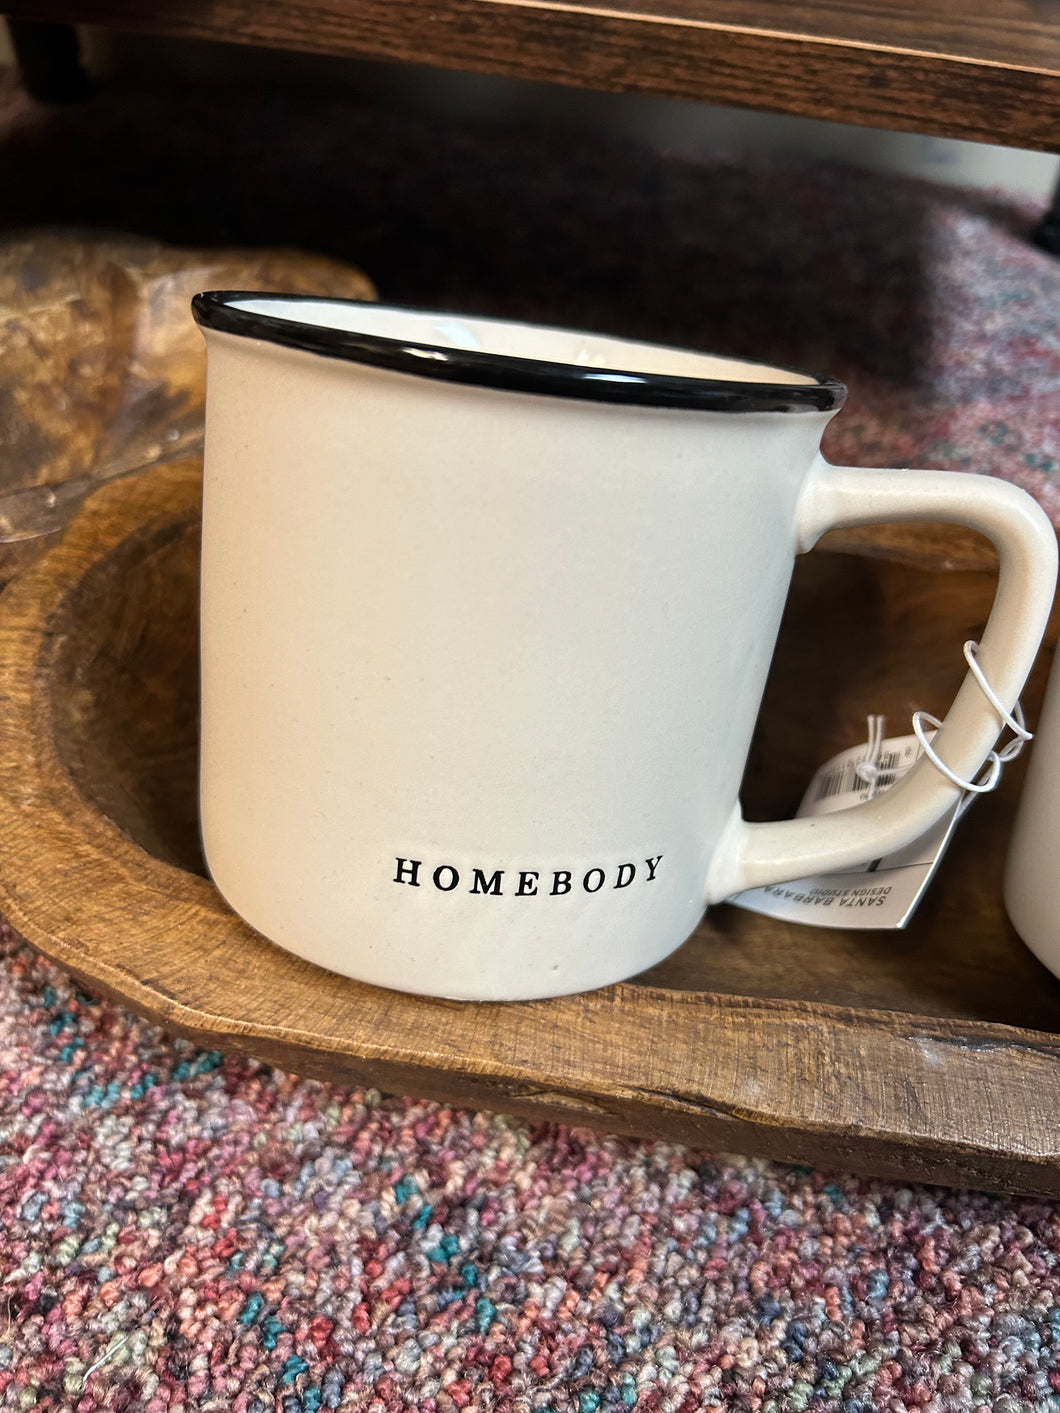 Homebody mug